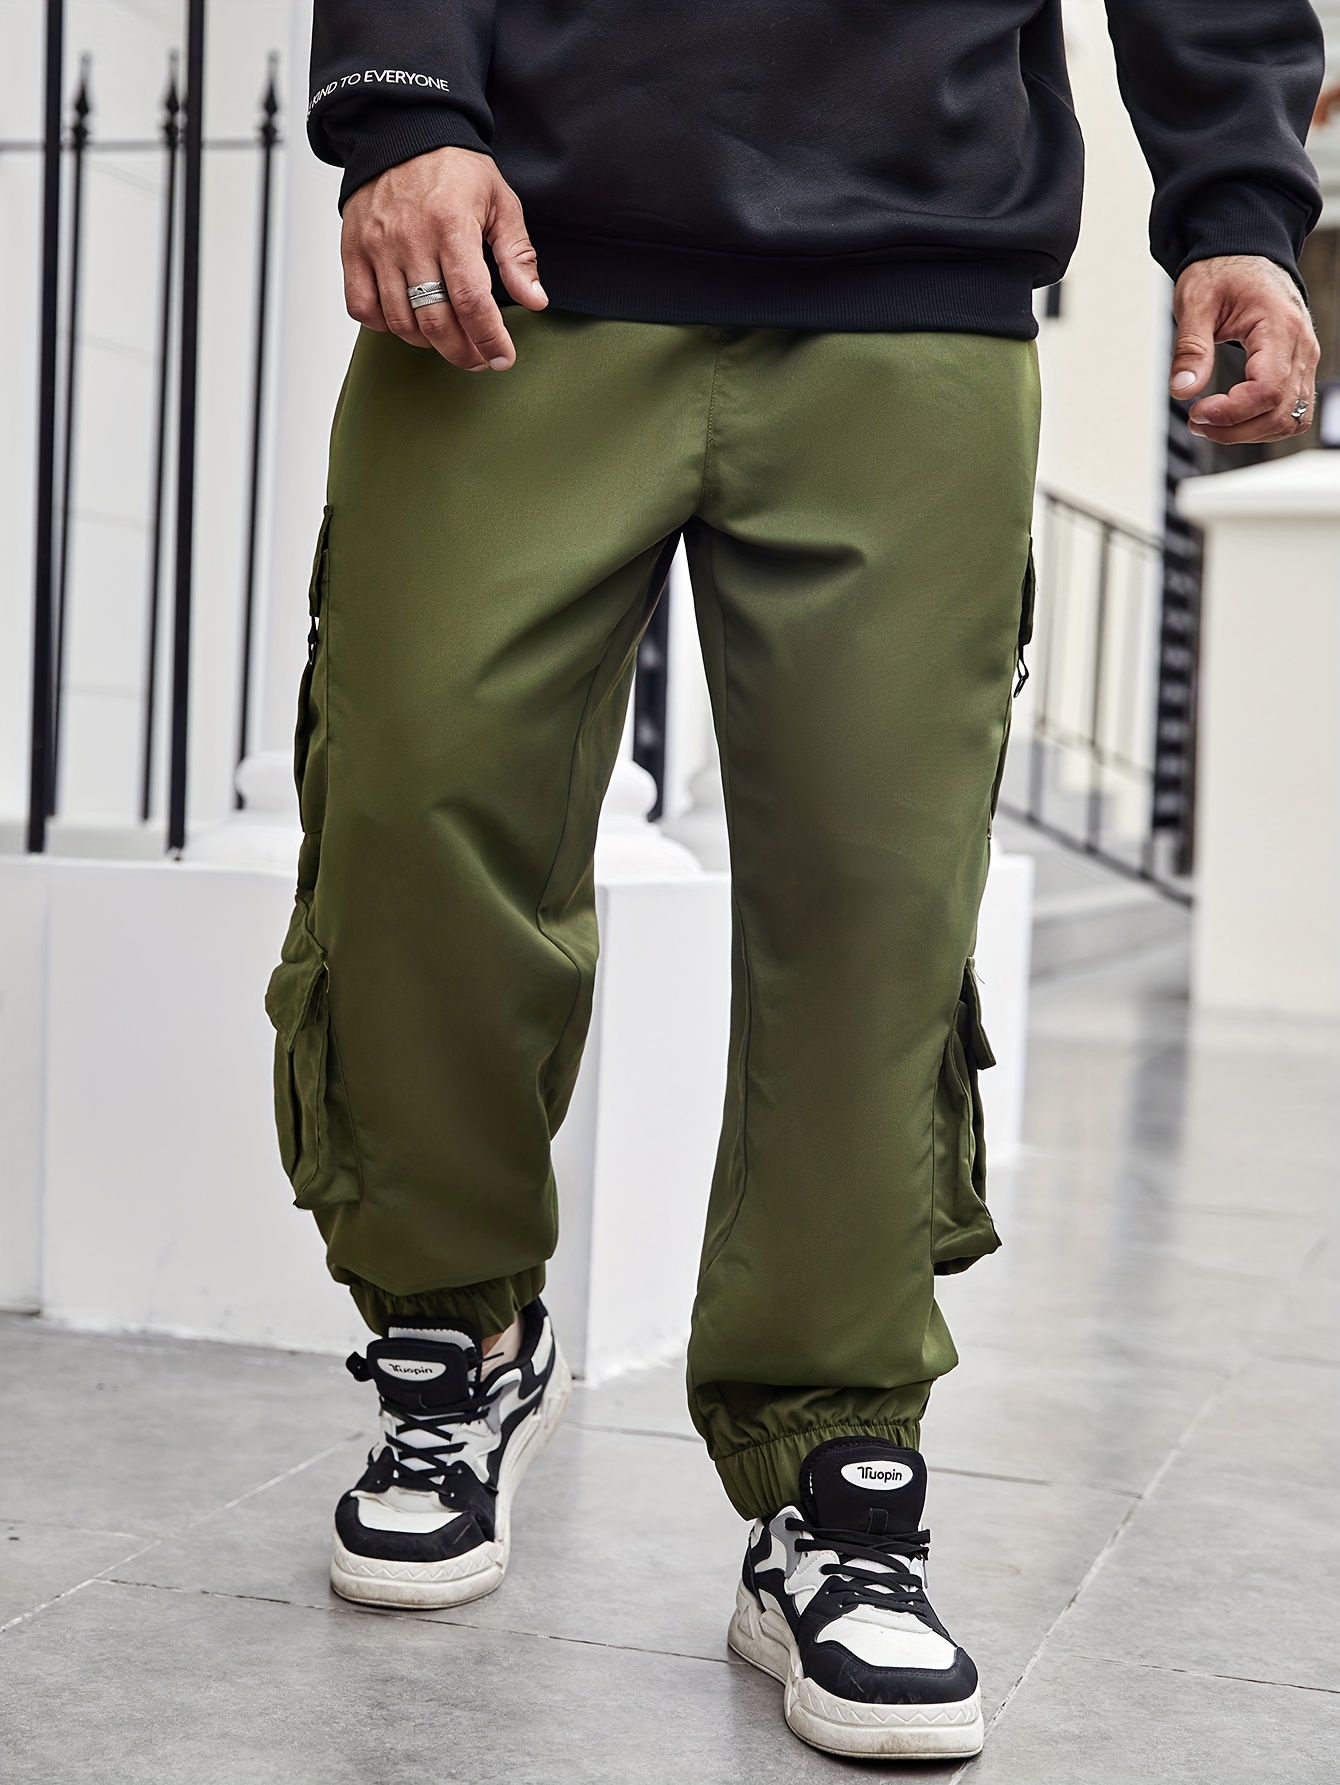 fartey Cargo Pants for Men Plus Size Multiple Pockets Baggy Comfy